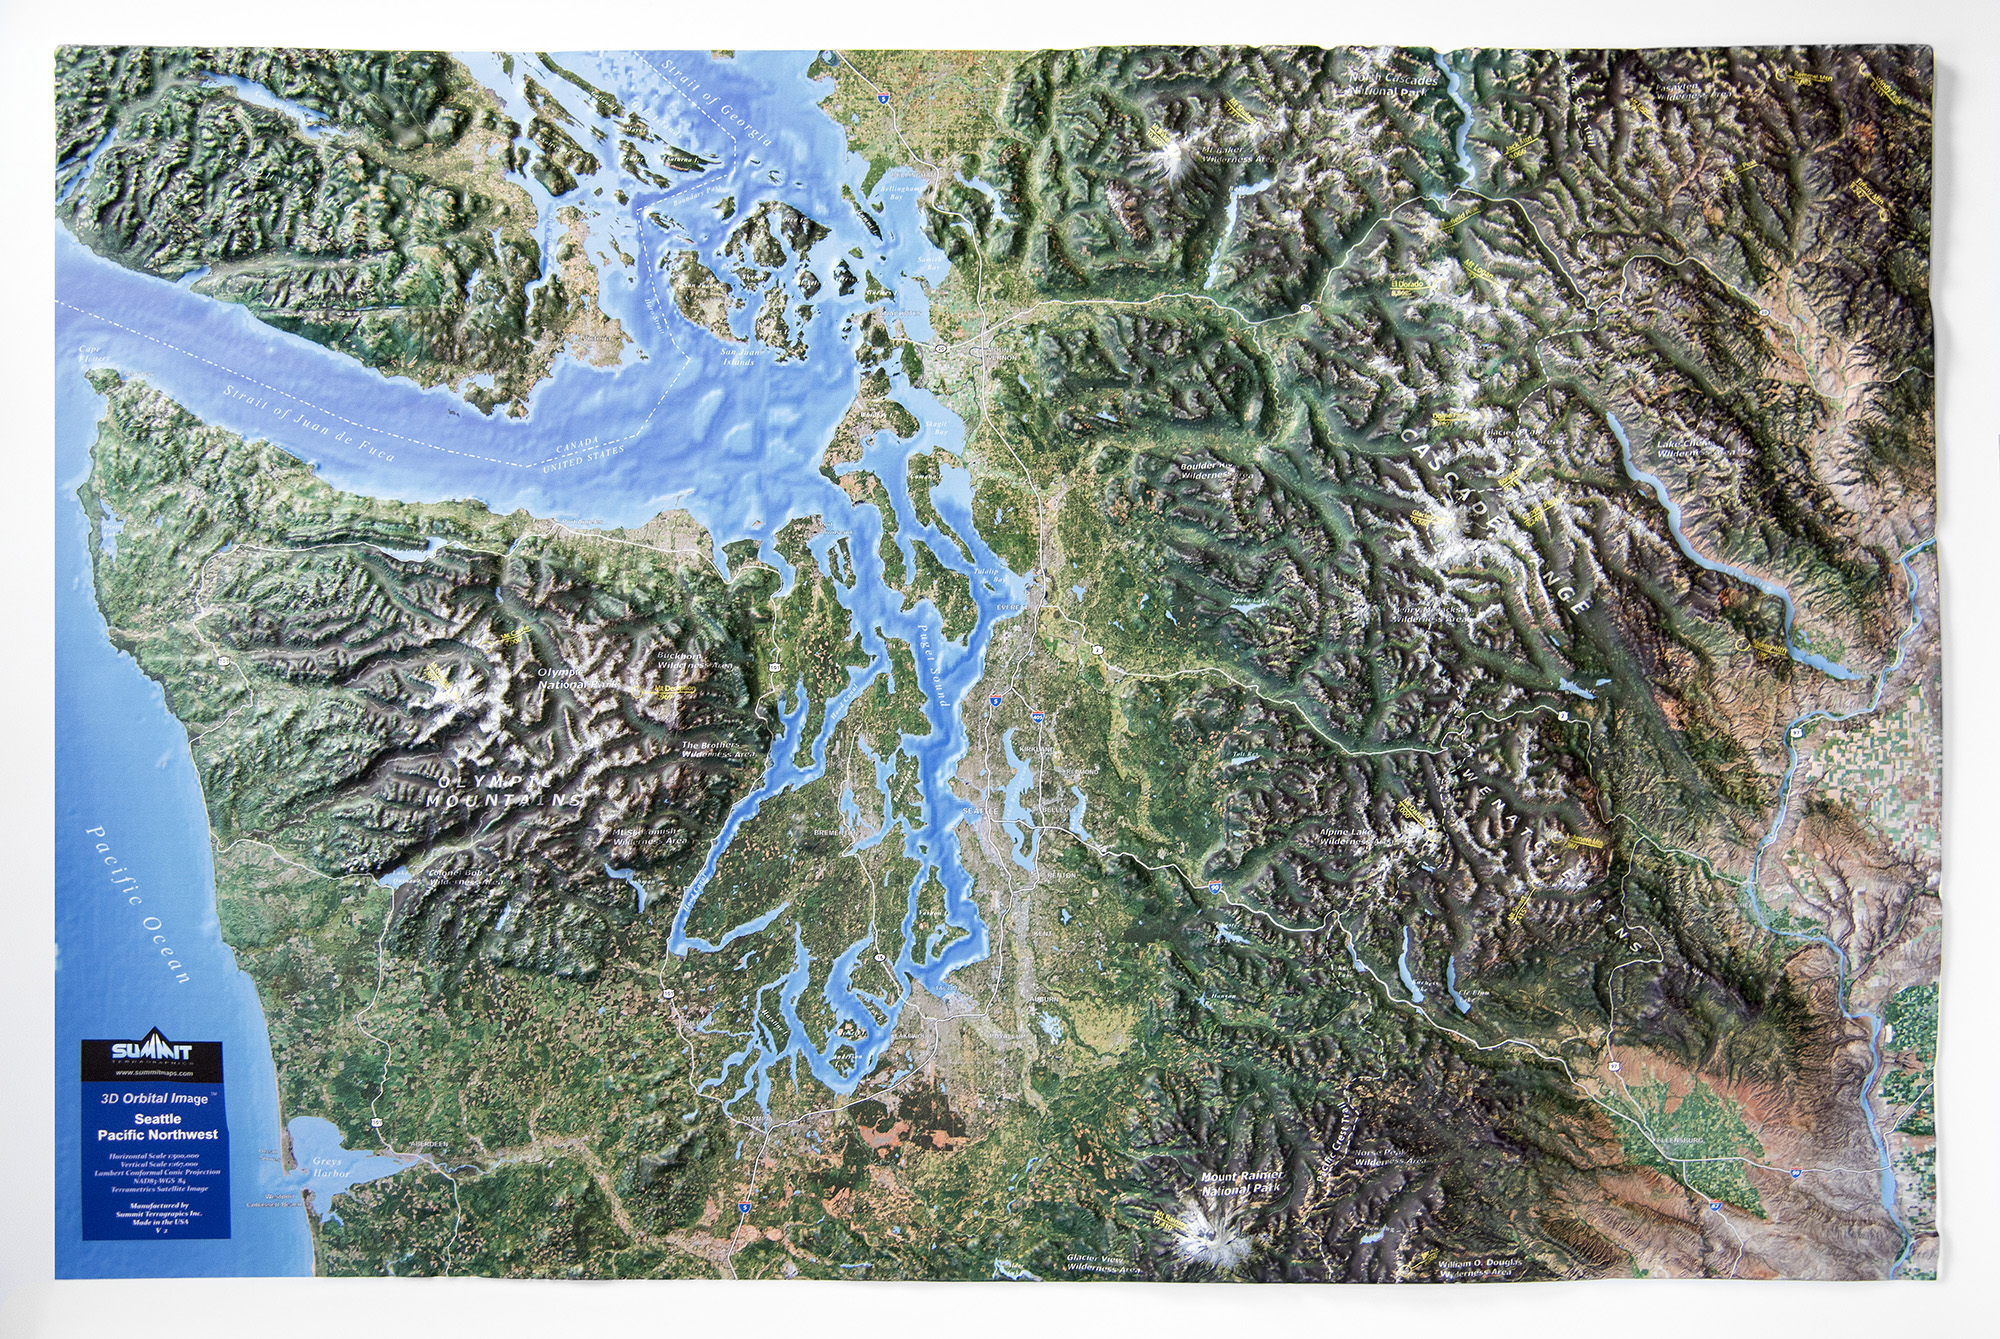 Seattle Pacific Northwest Orbital Image DSC 2596 2 